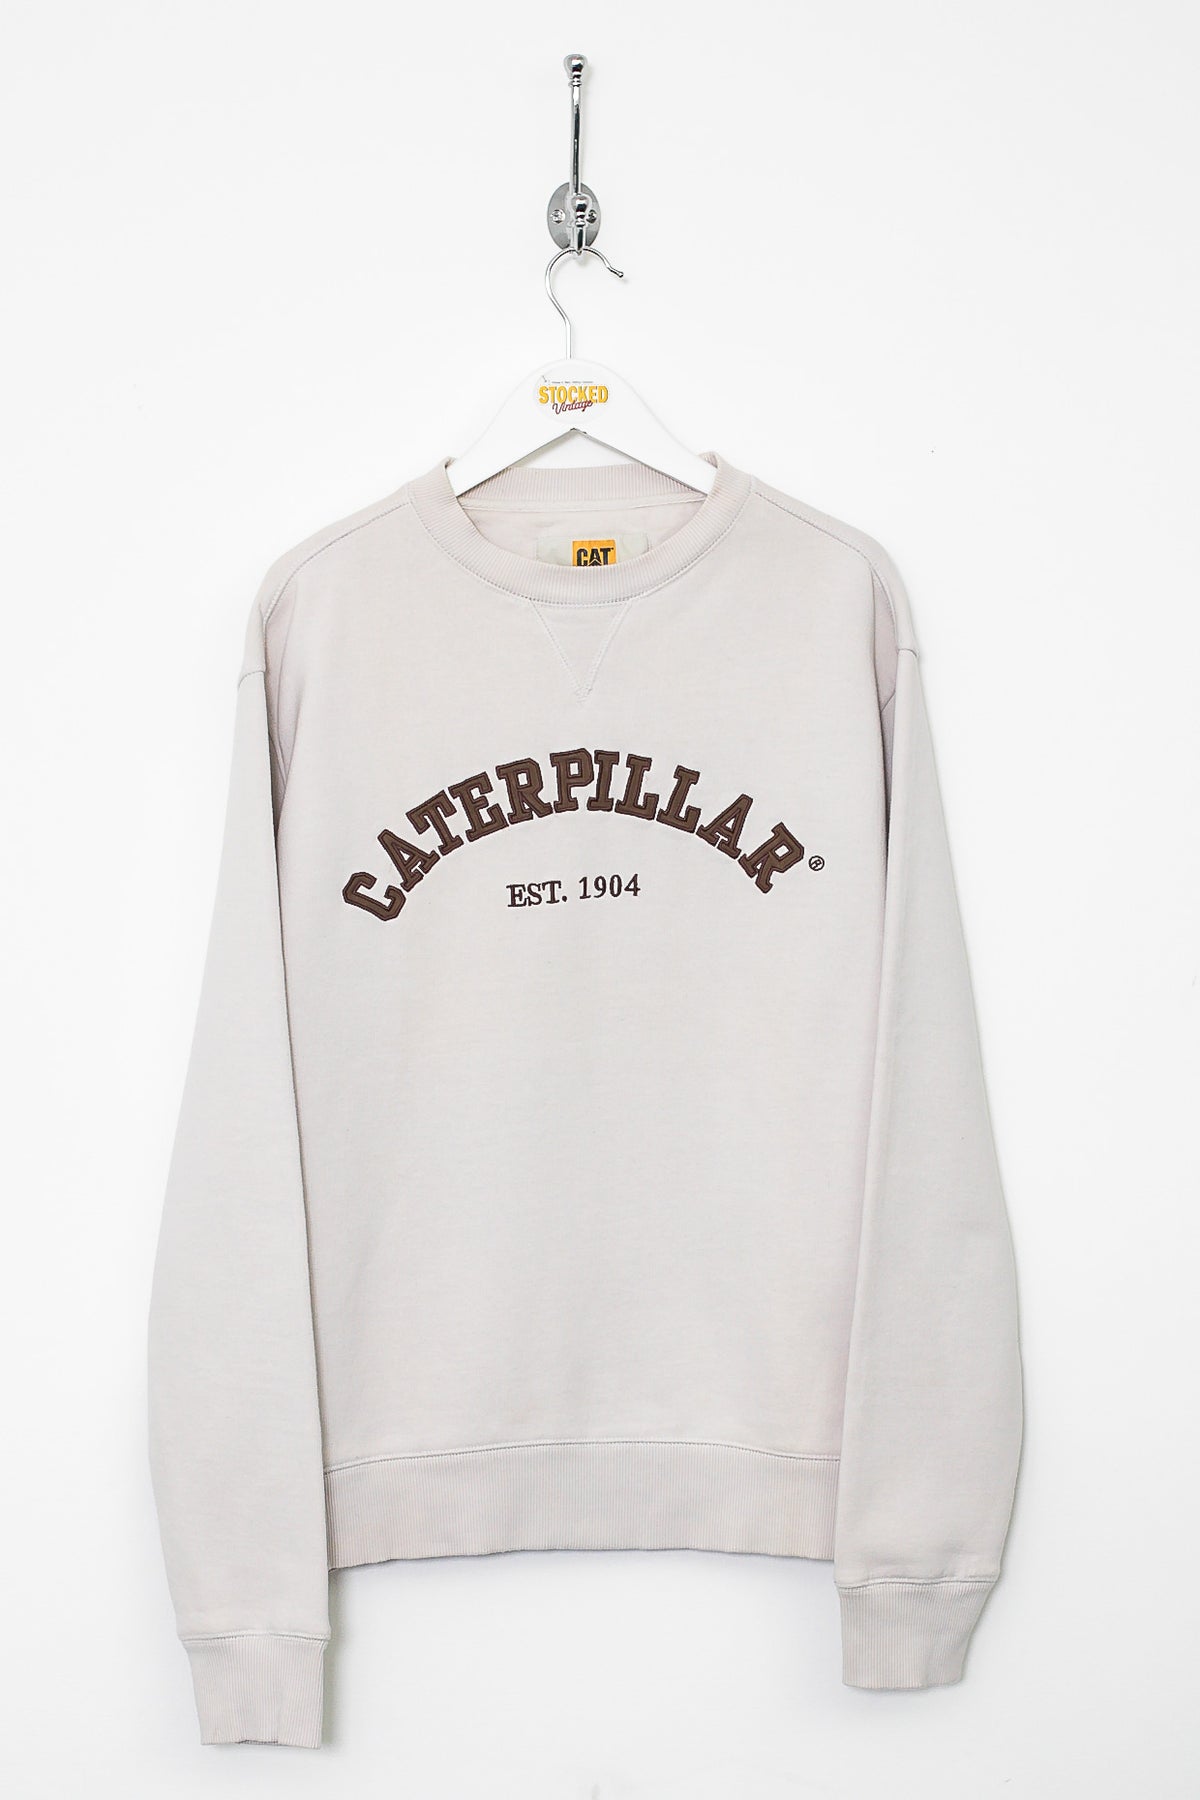 00s Caterpillar Sweatshirt (S)